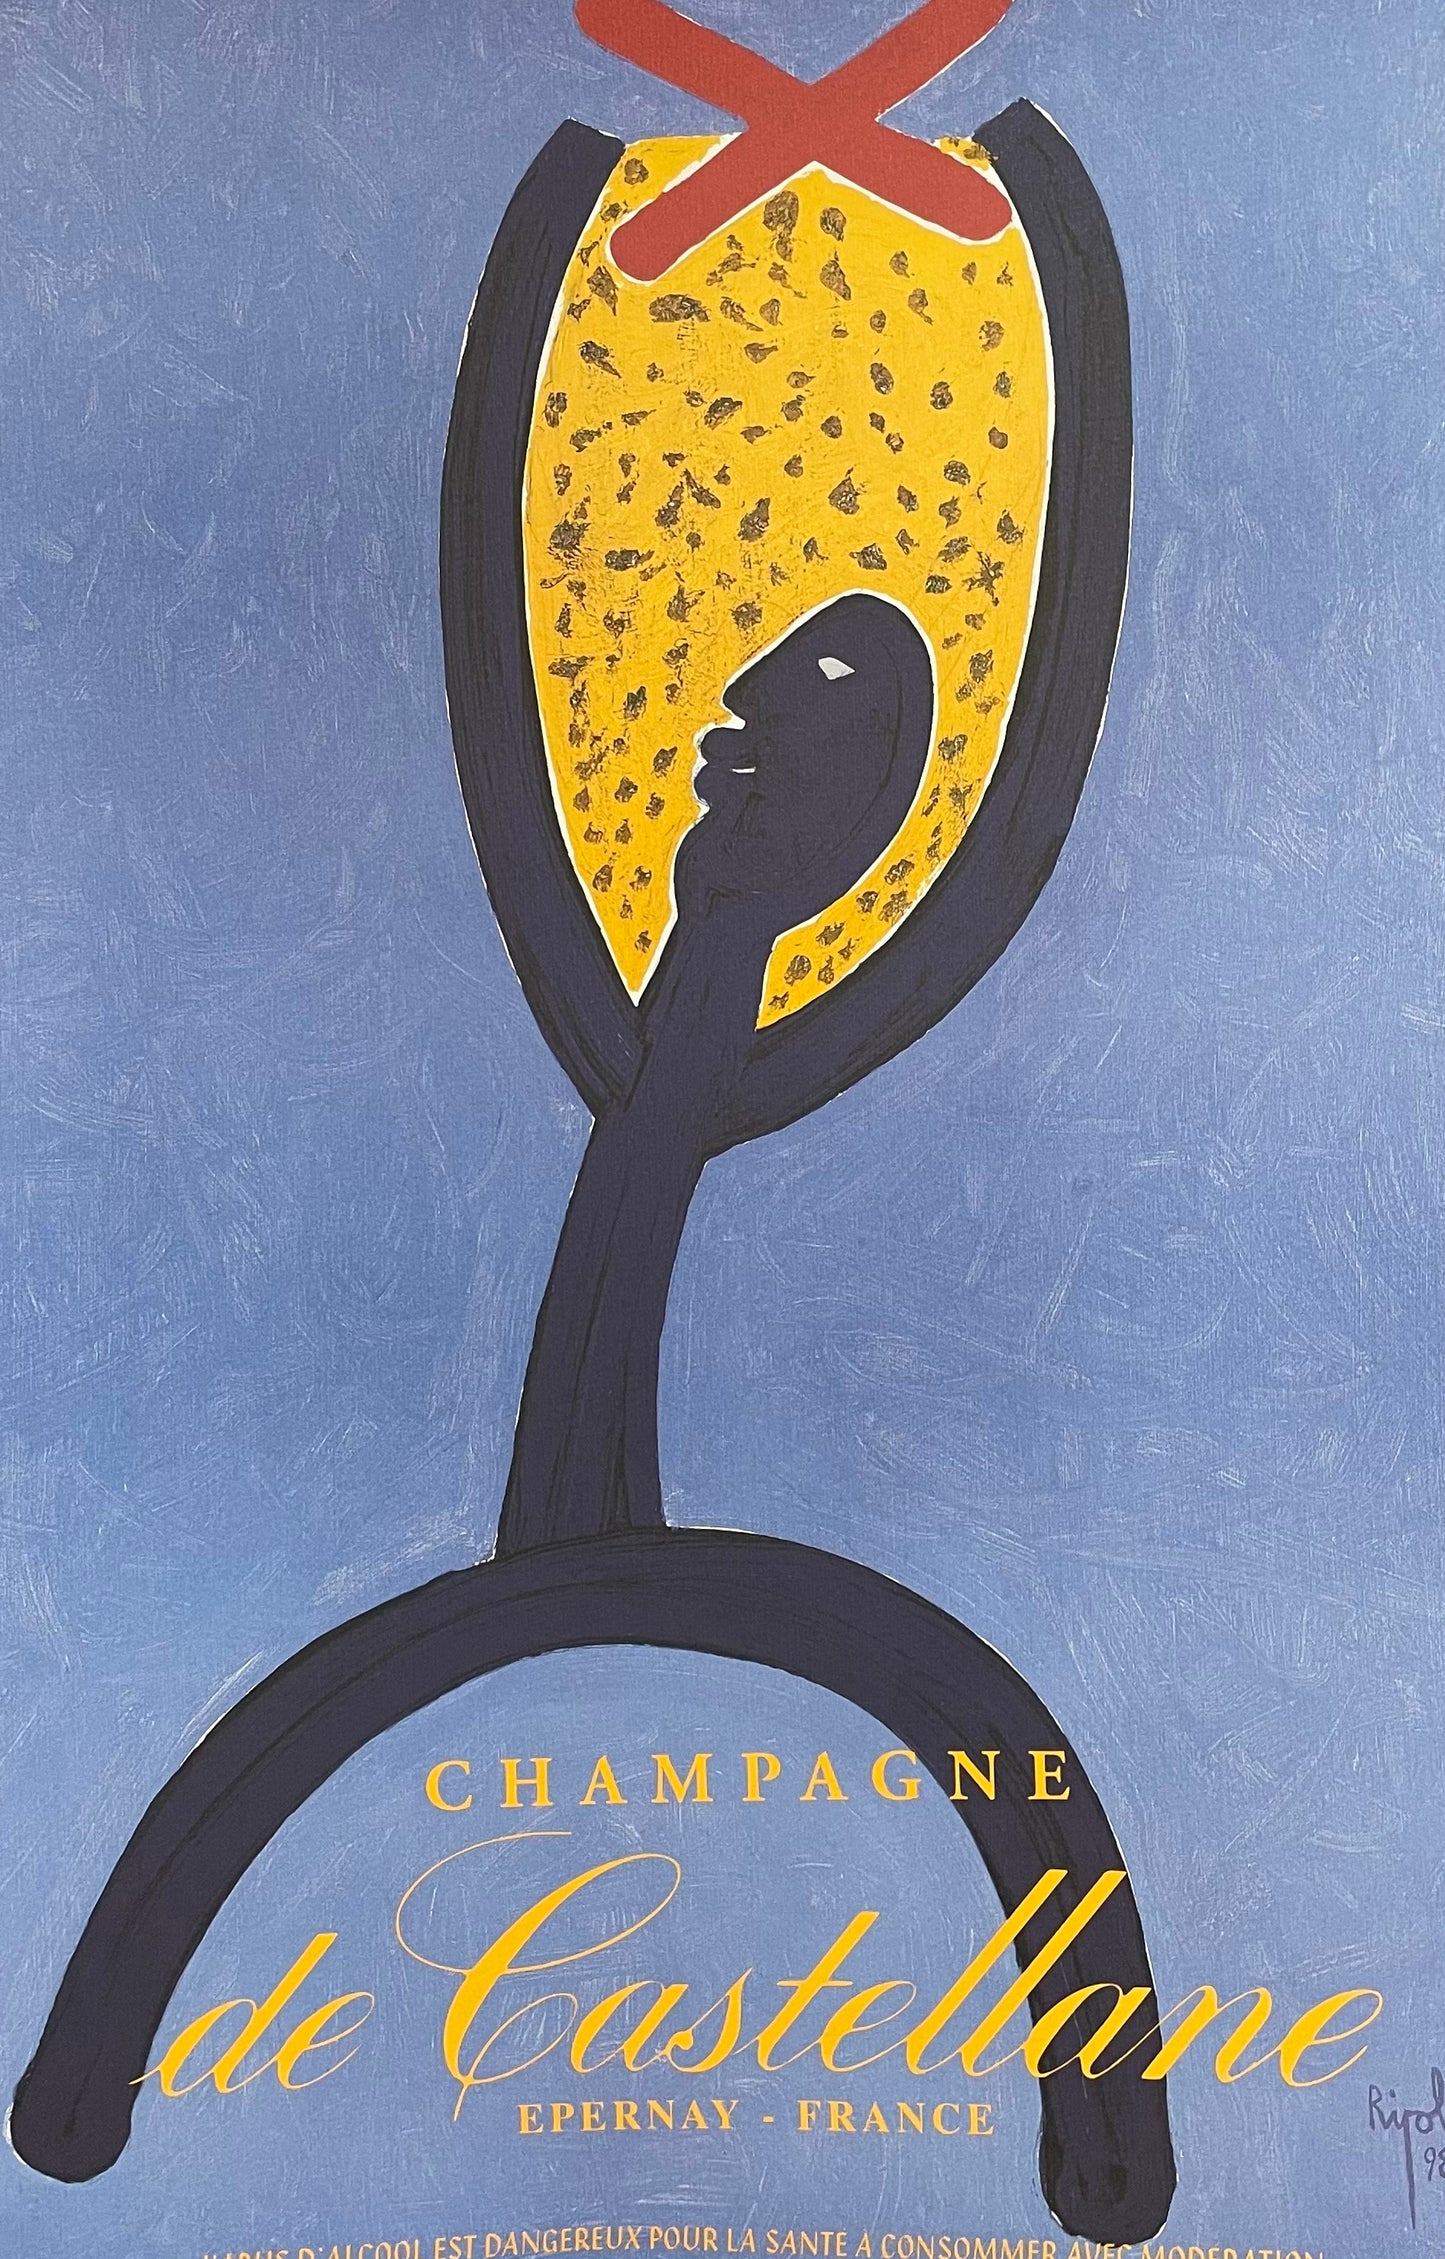 Champagne de Castellane by Ripolles